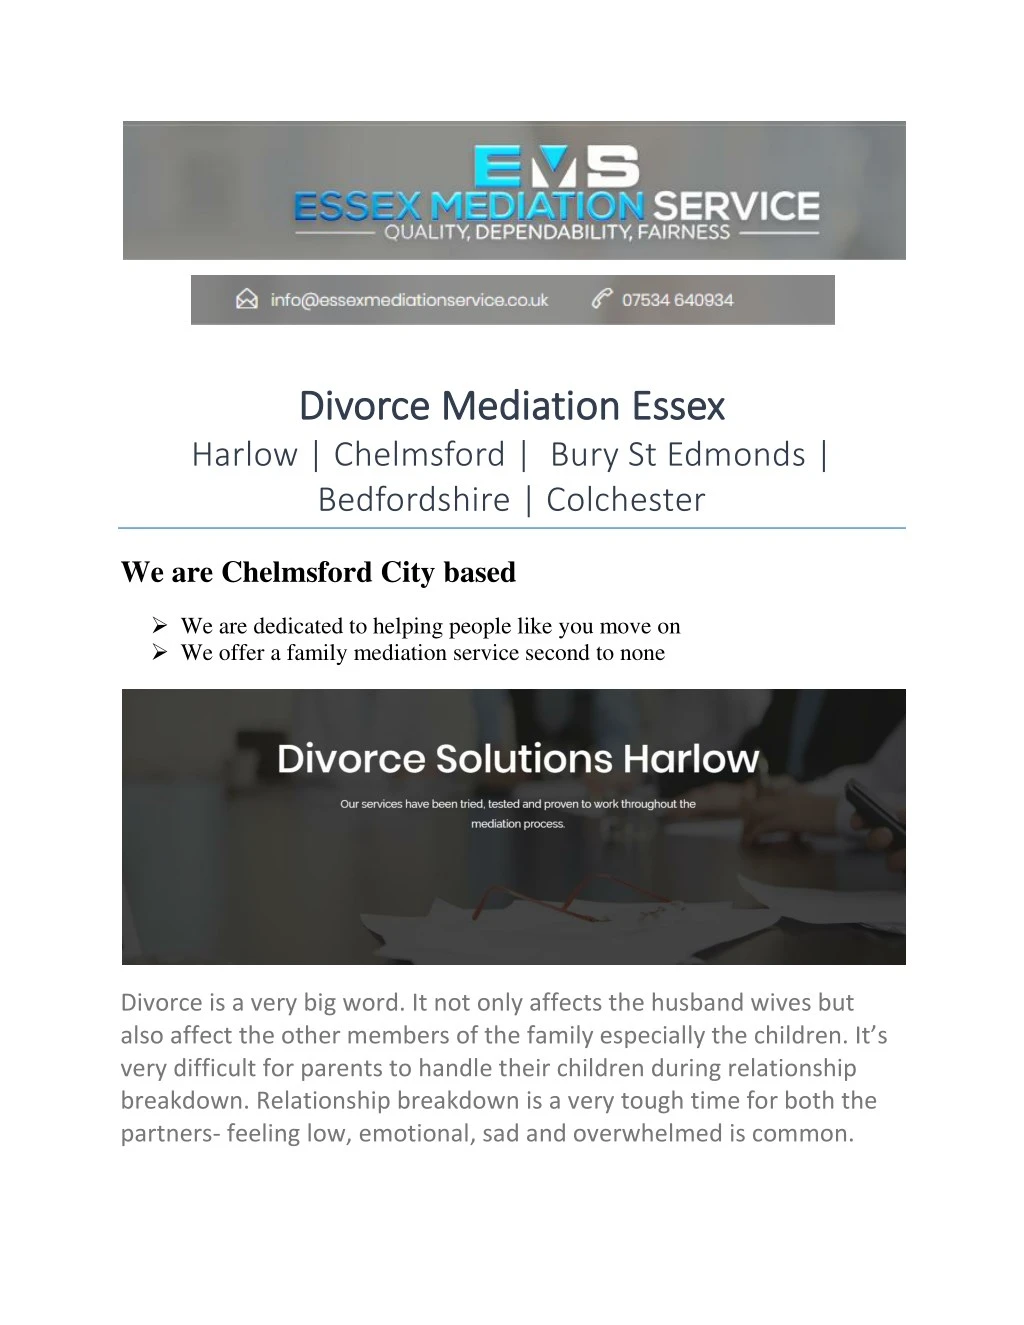 divorce mediation divorce mediation essex harlow